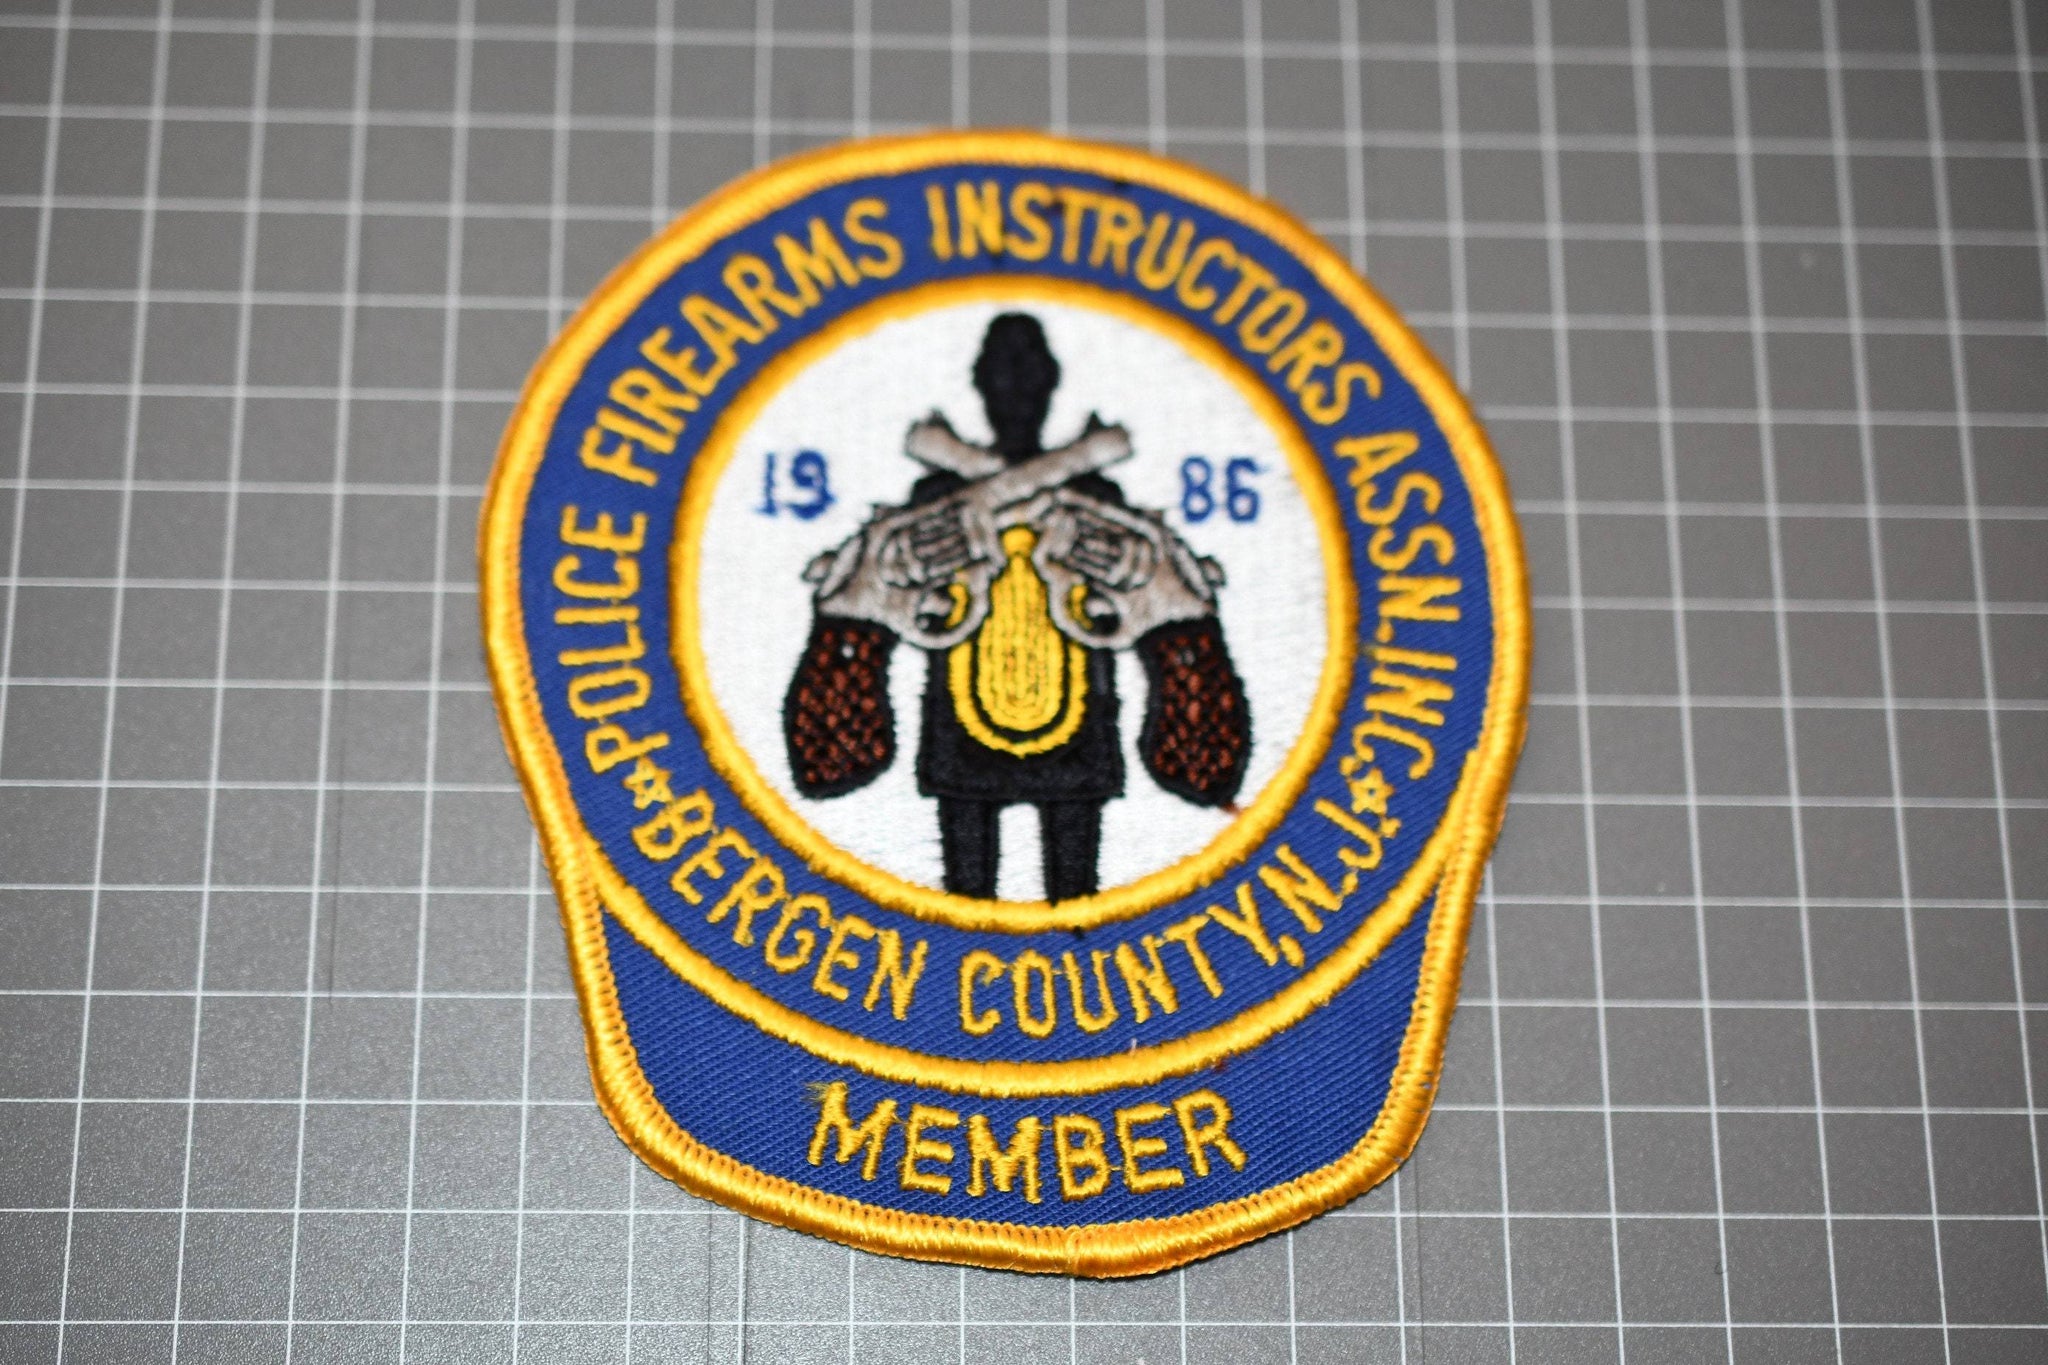 Police Firearms Instructors Association Bergen County New Jersey Patch (B5)